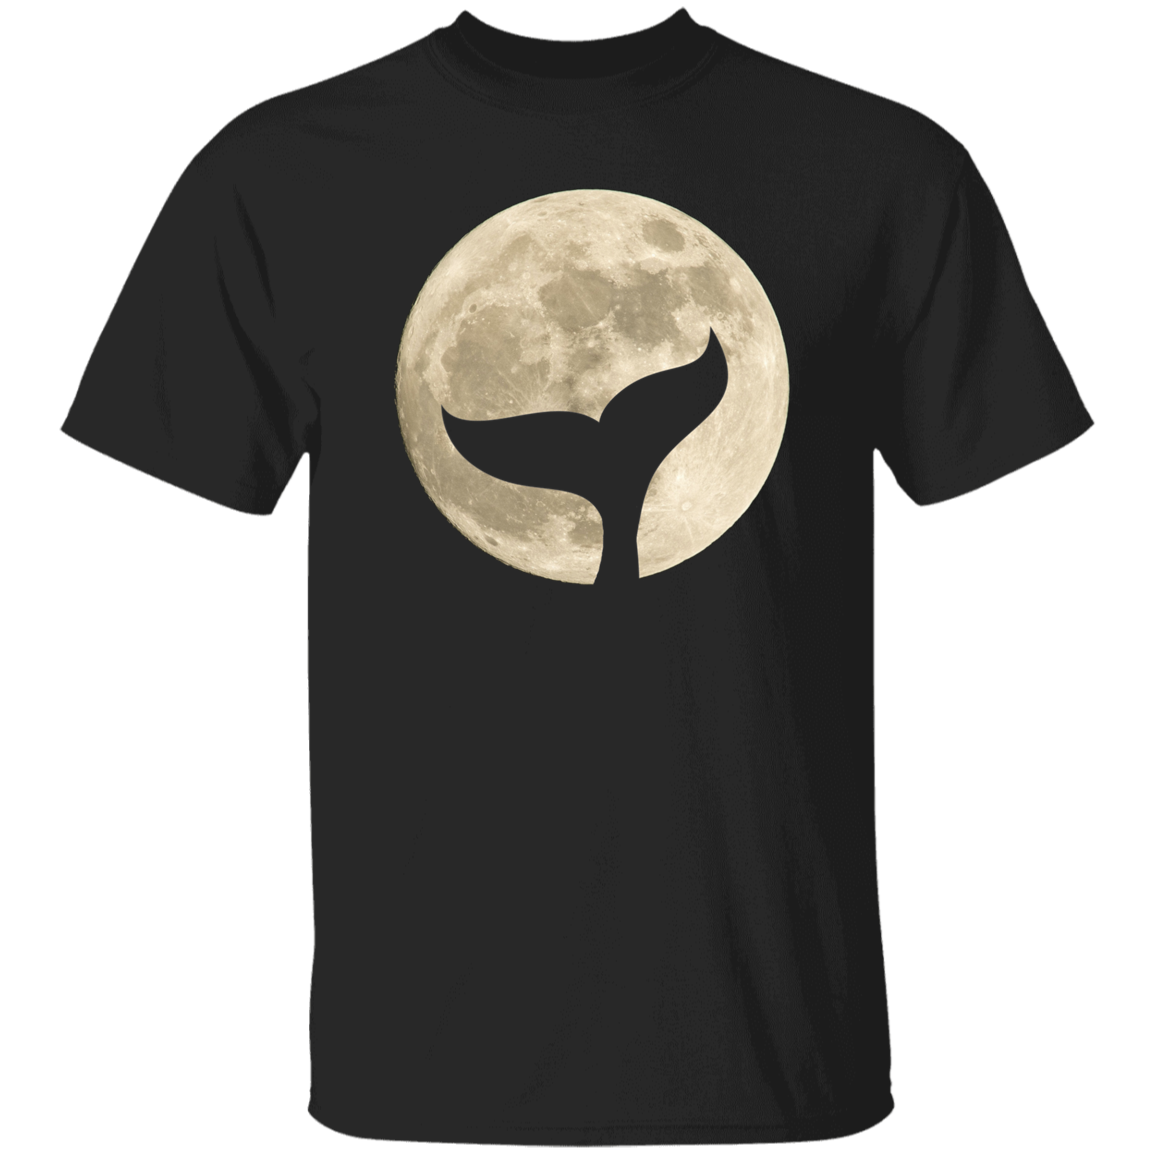 Whale Tail Moon - T-shirts, Hoodies and Sweatshirts